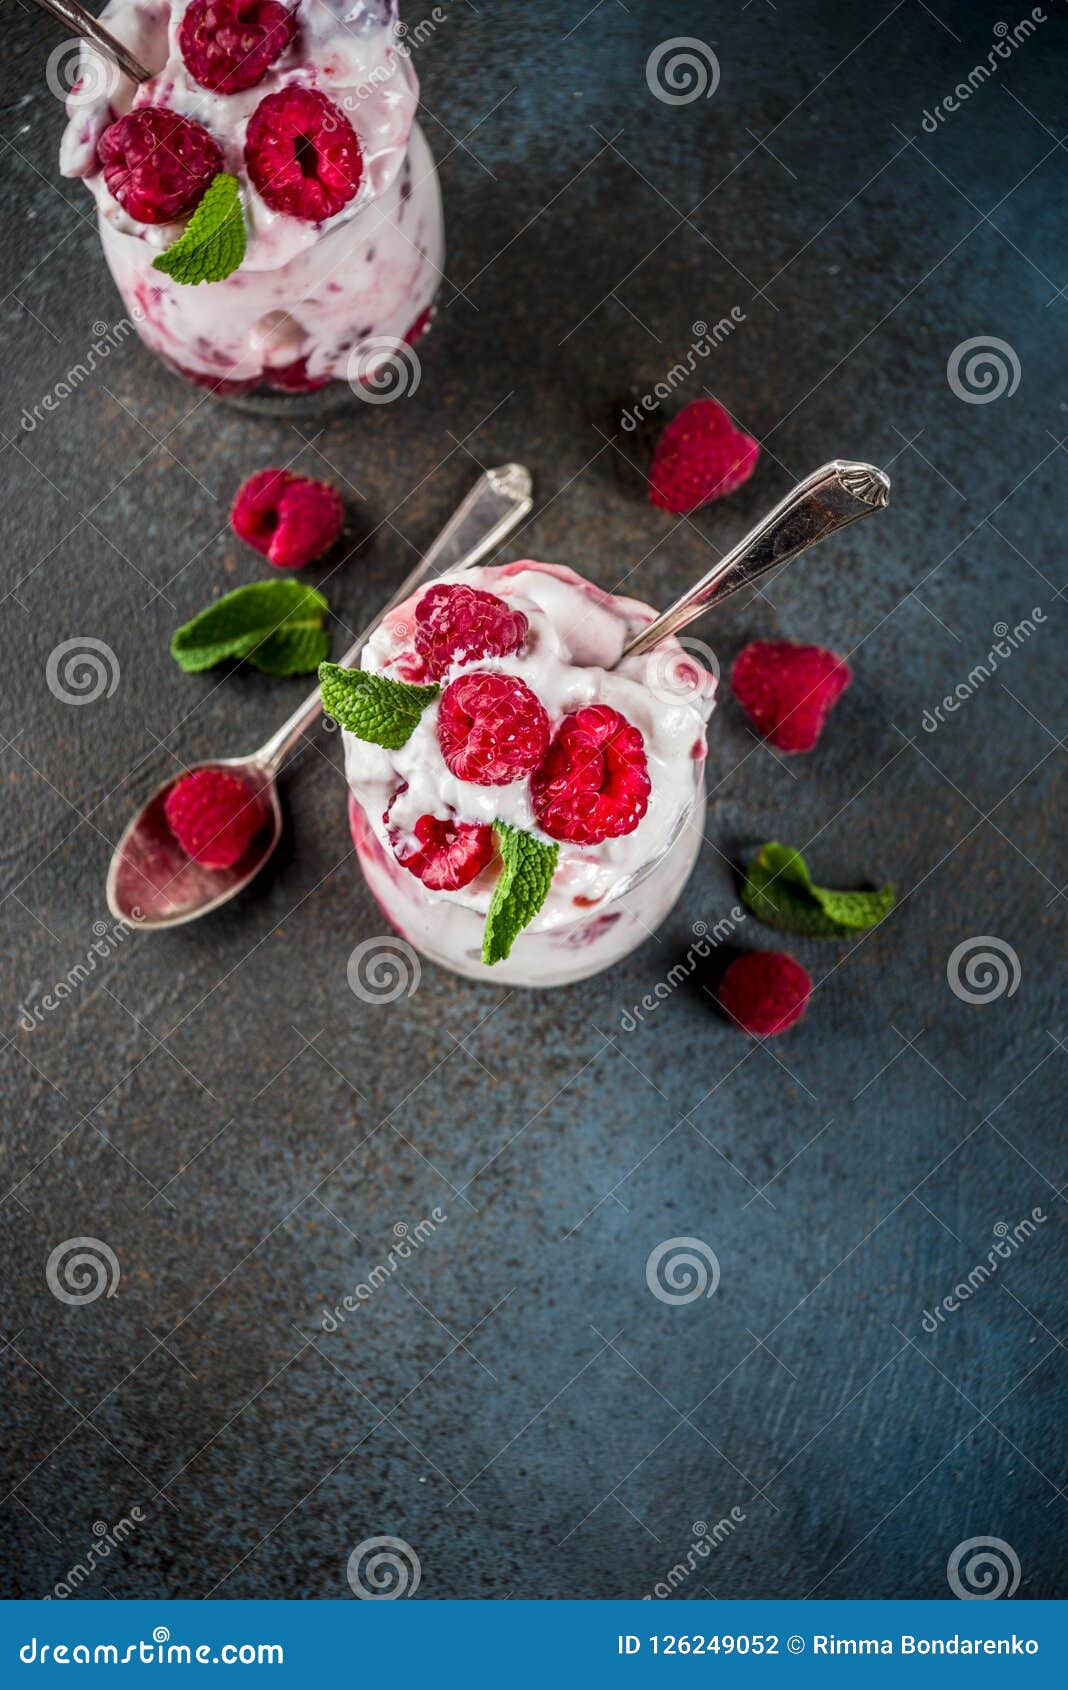 Breakfast Dessert with Fresh Raspberries Stock Photo - Image of ...